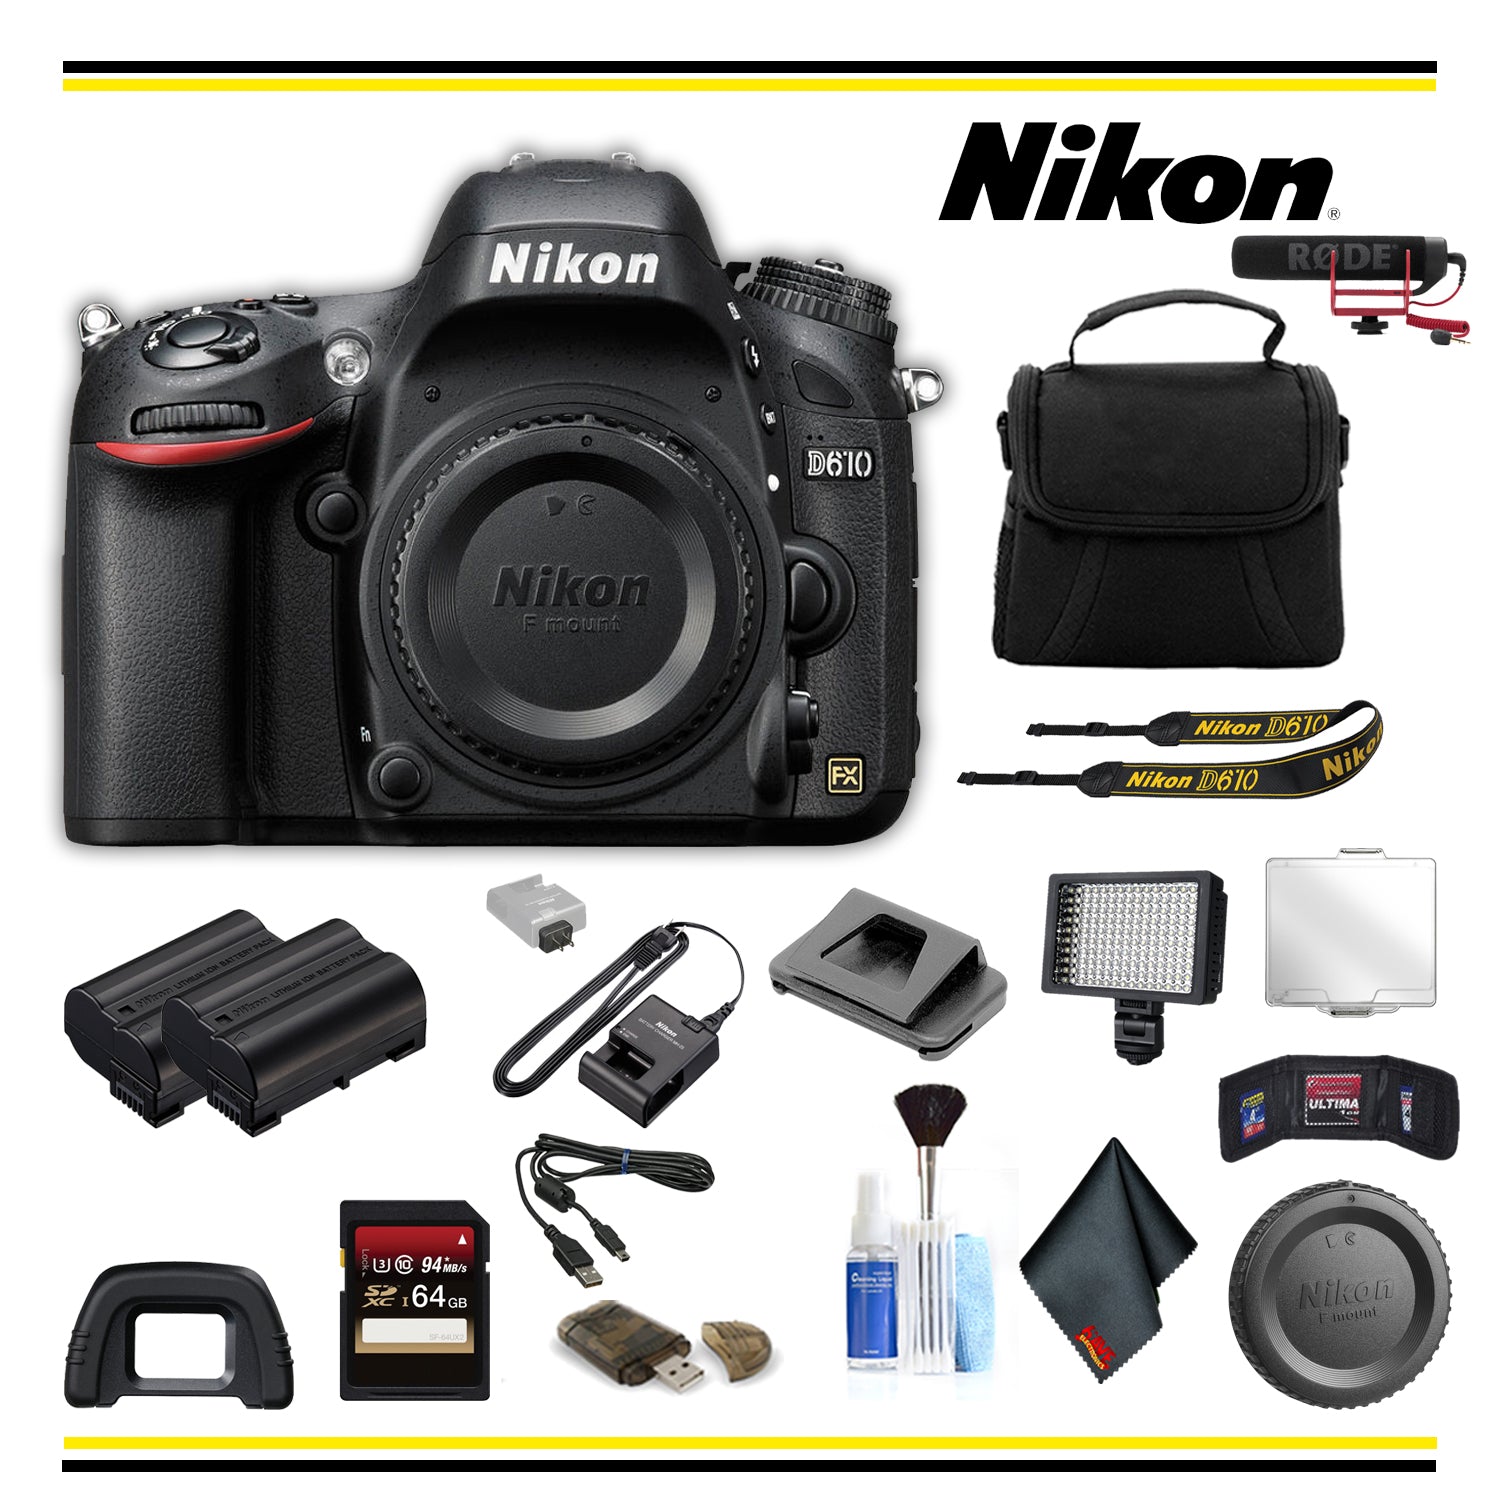 Nikon D610 DSLR Camera (1540 ) Advanced Bundle W/ Bag, Extra Battery, LED Light, Mic, and More - (International Model )